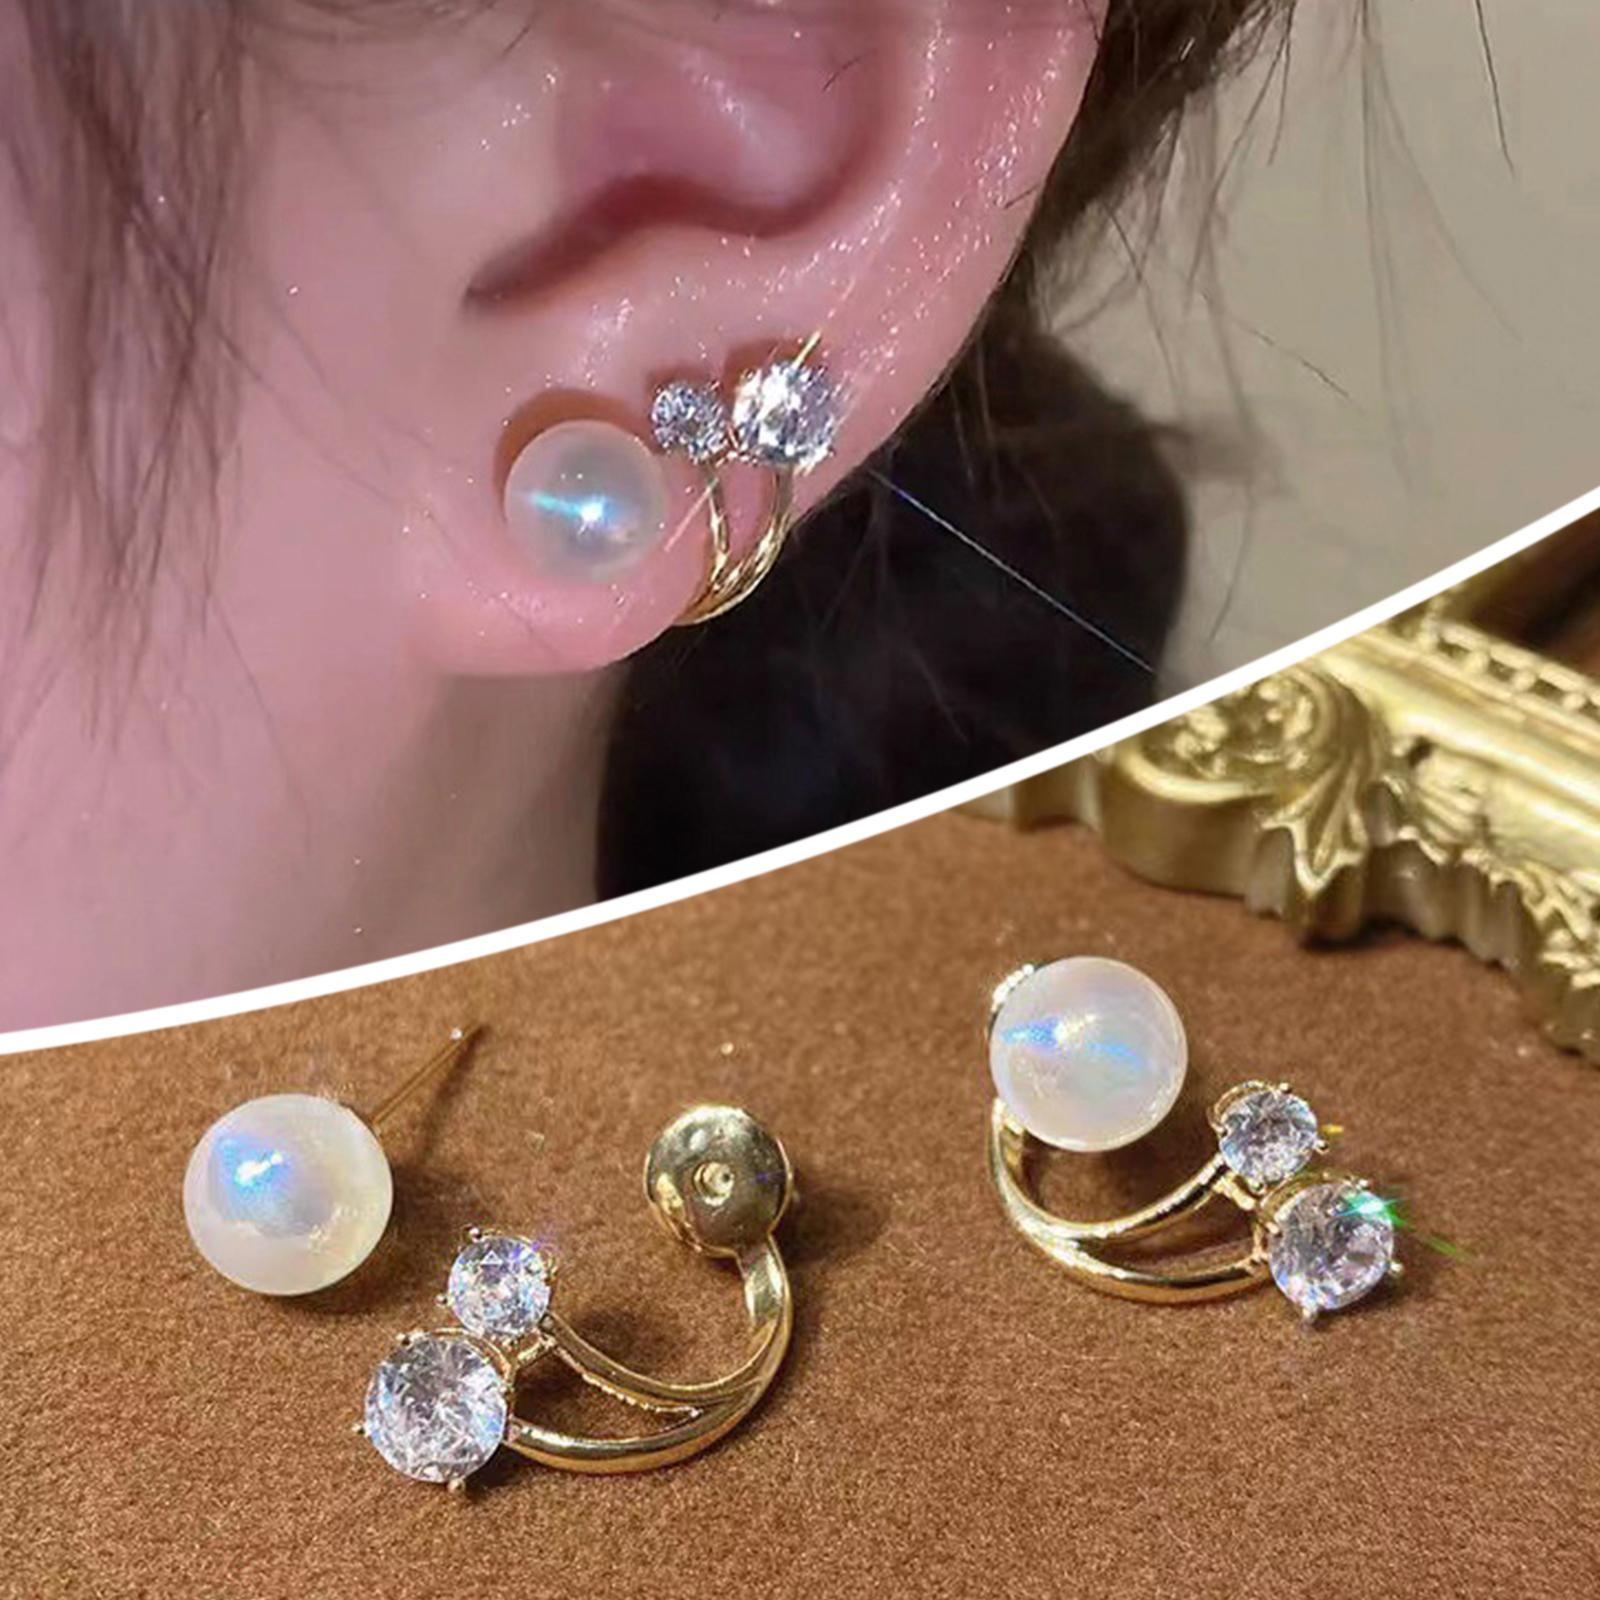 Fashion Rhinestone Crystal Pearl Ear Stud Earrings Jewelry Gift Women G3C9 - image 4 of 9